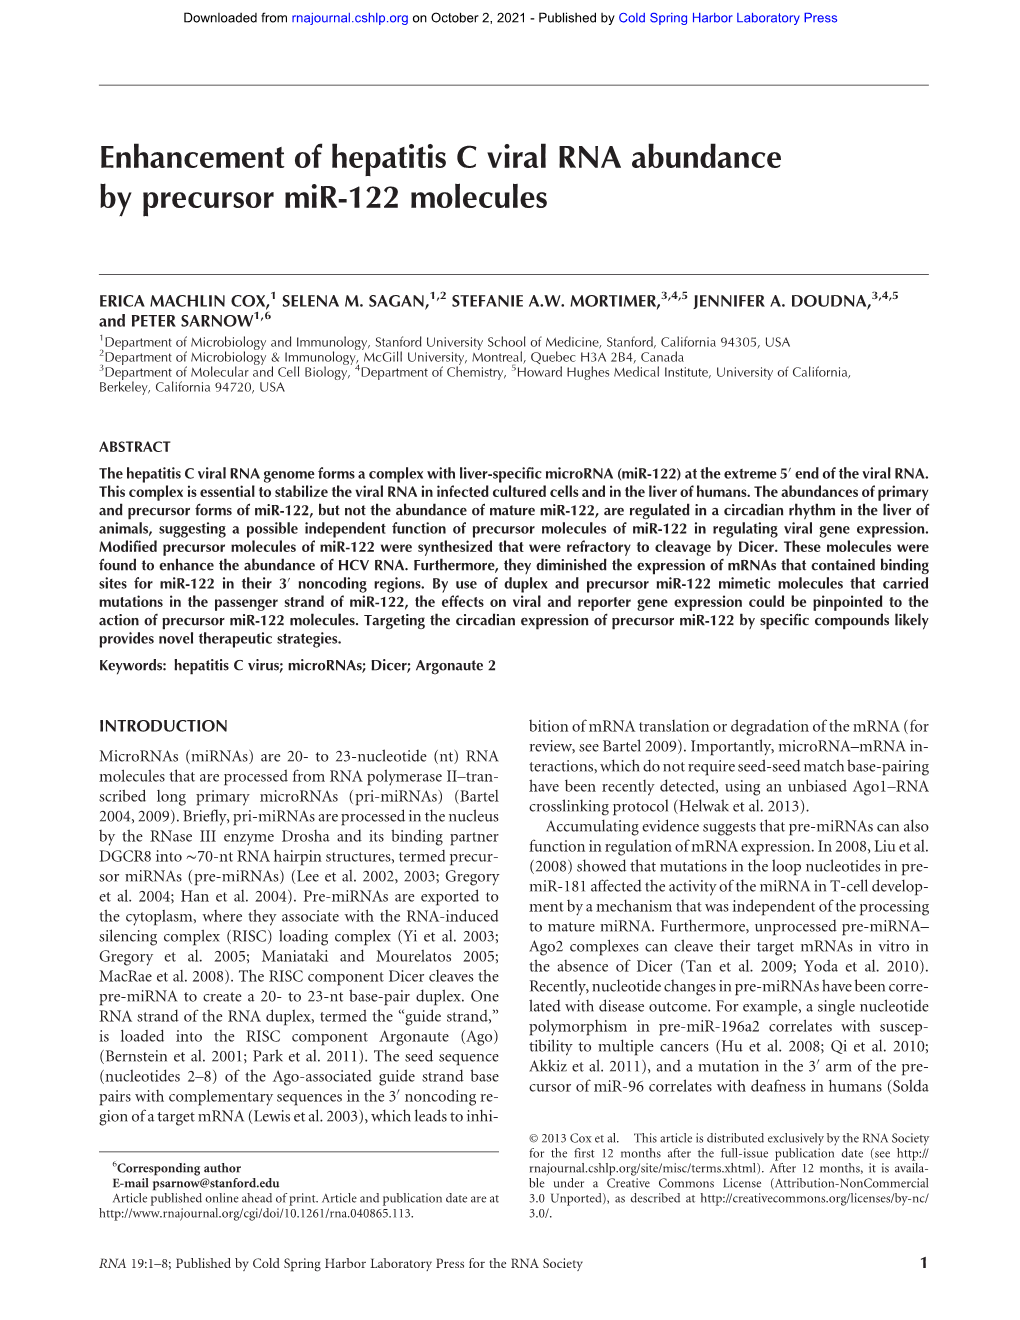 Enhancement of Hepatitis C Viral RNA Abundance by Precursor Mir-122 Molecules